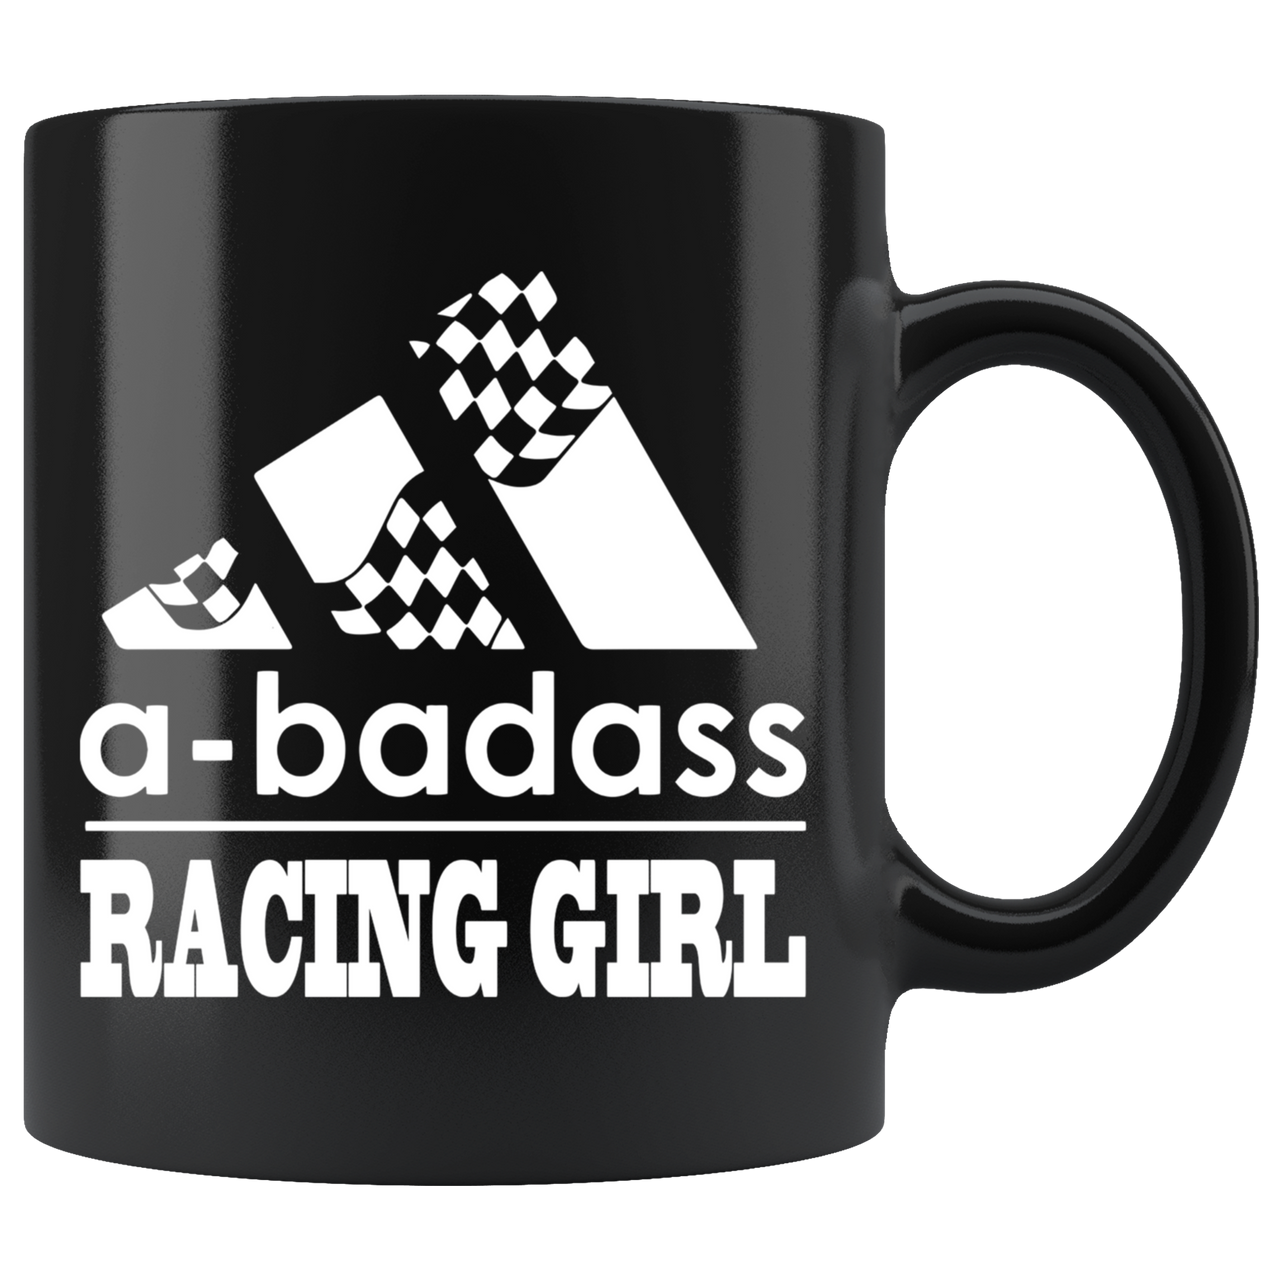 A-Badass Racing Girl Mug!